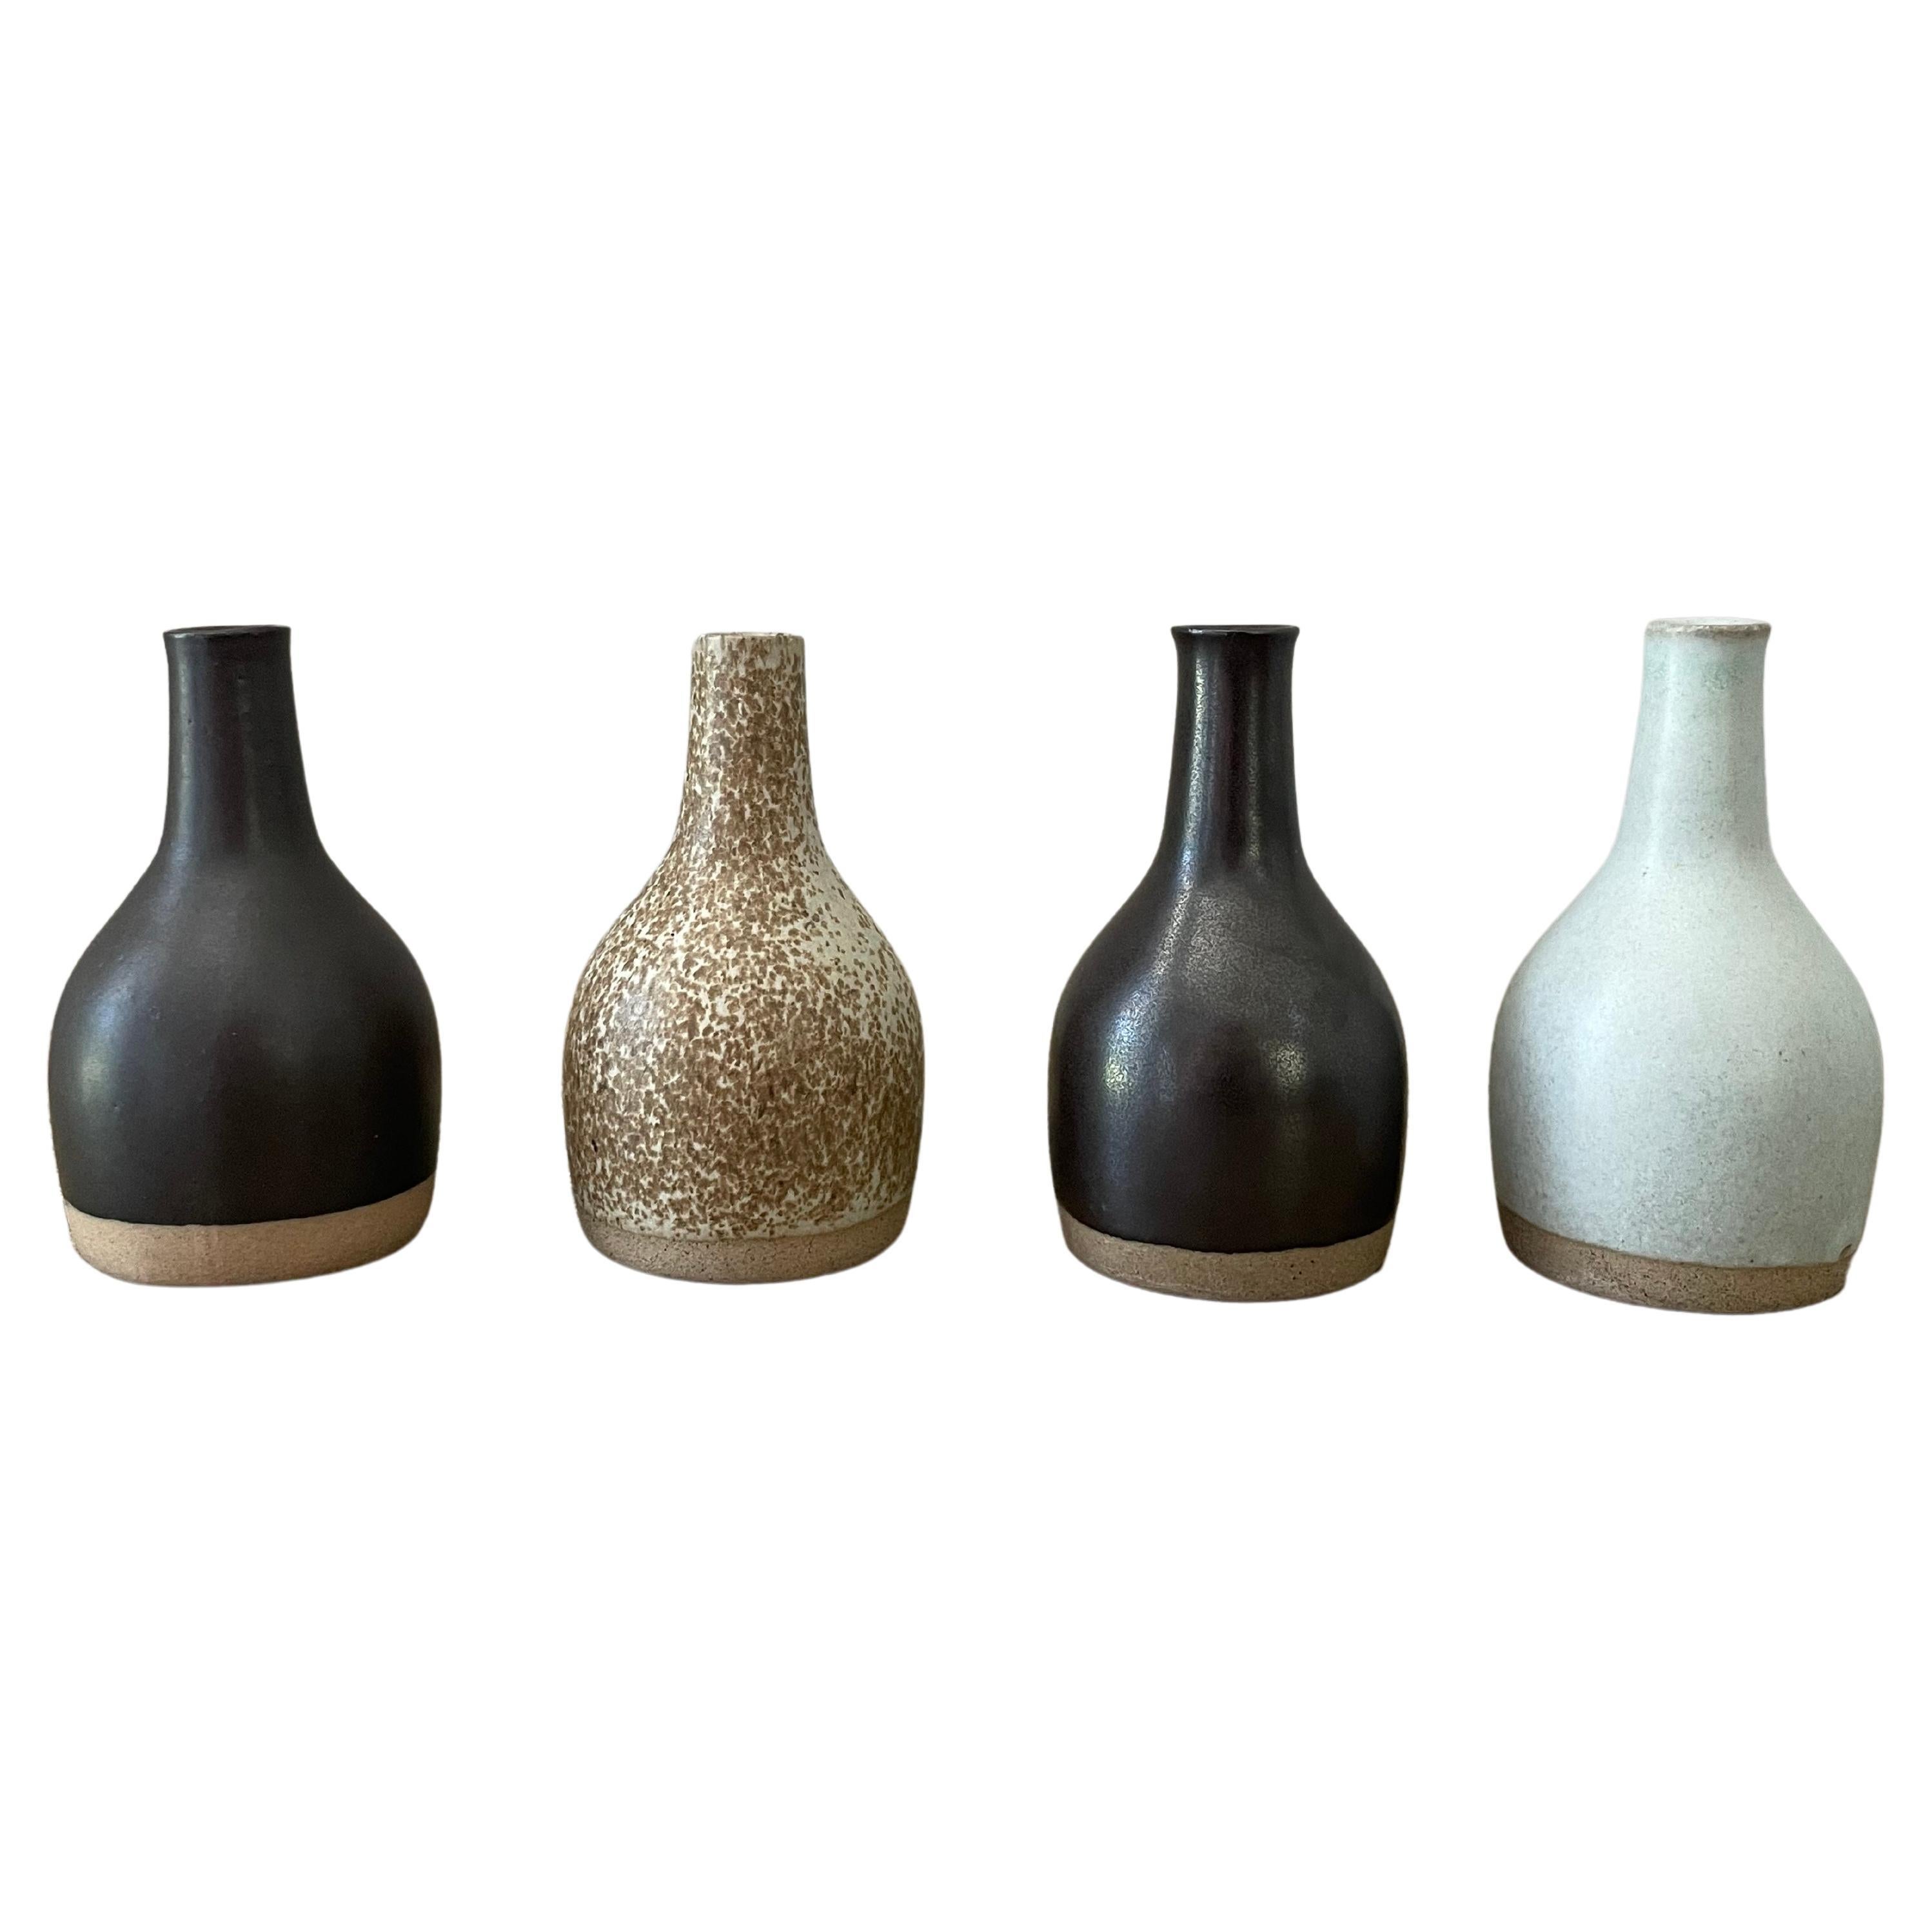 Gordon and Jane Martz Collection of Ceramic Vases